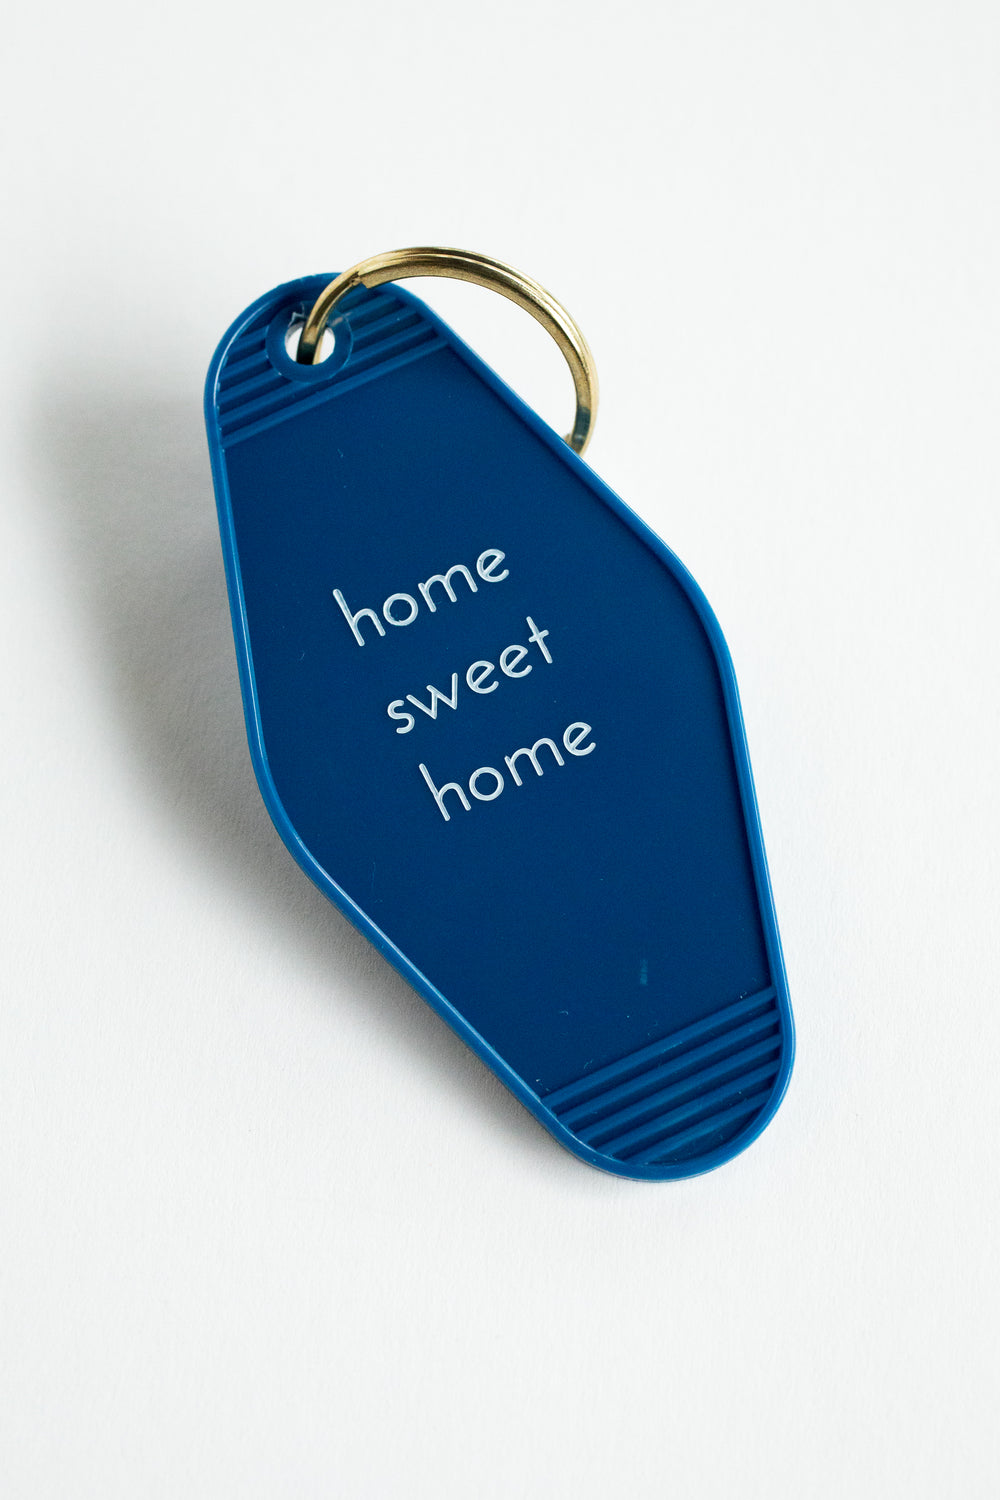 Home Sweet Home Keychain